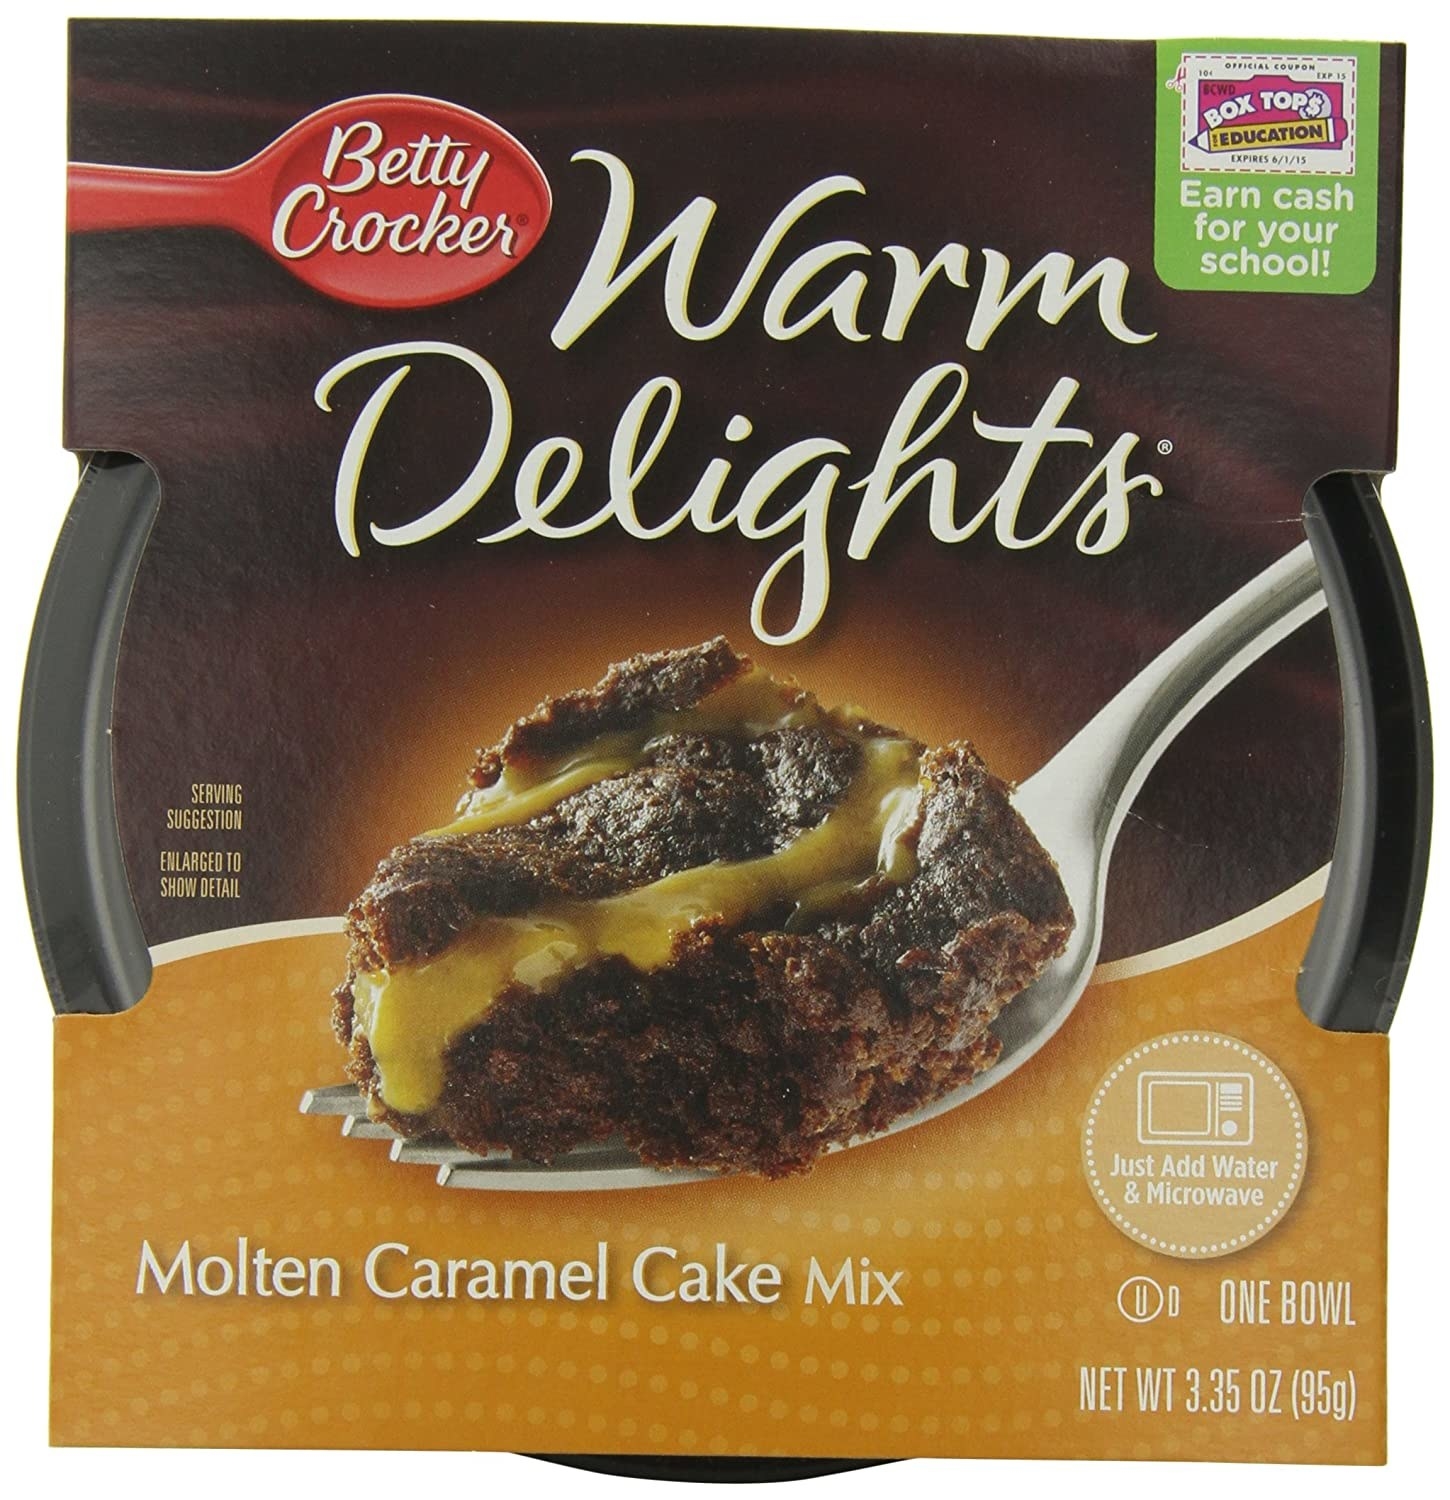 Promotional image of Betty Crocker Warm Delights